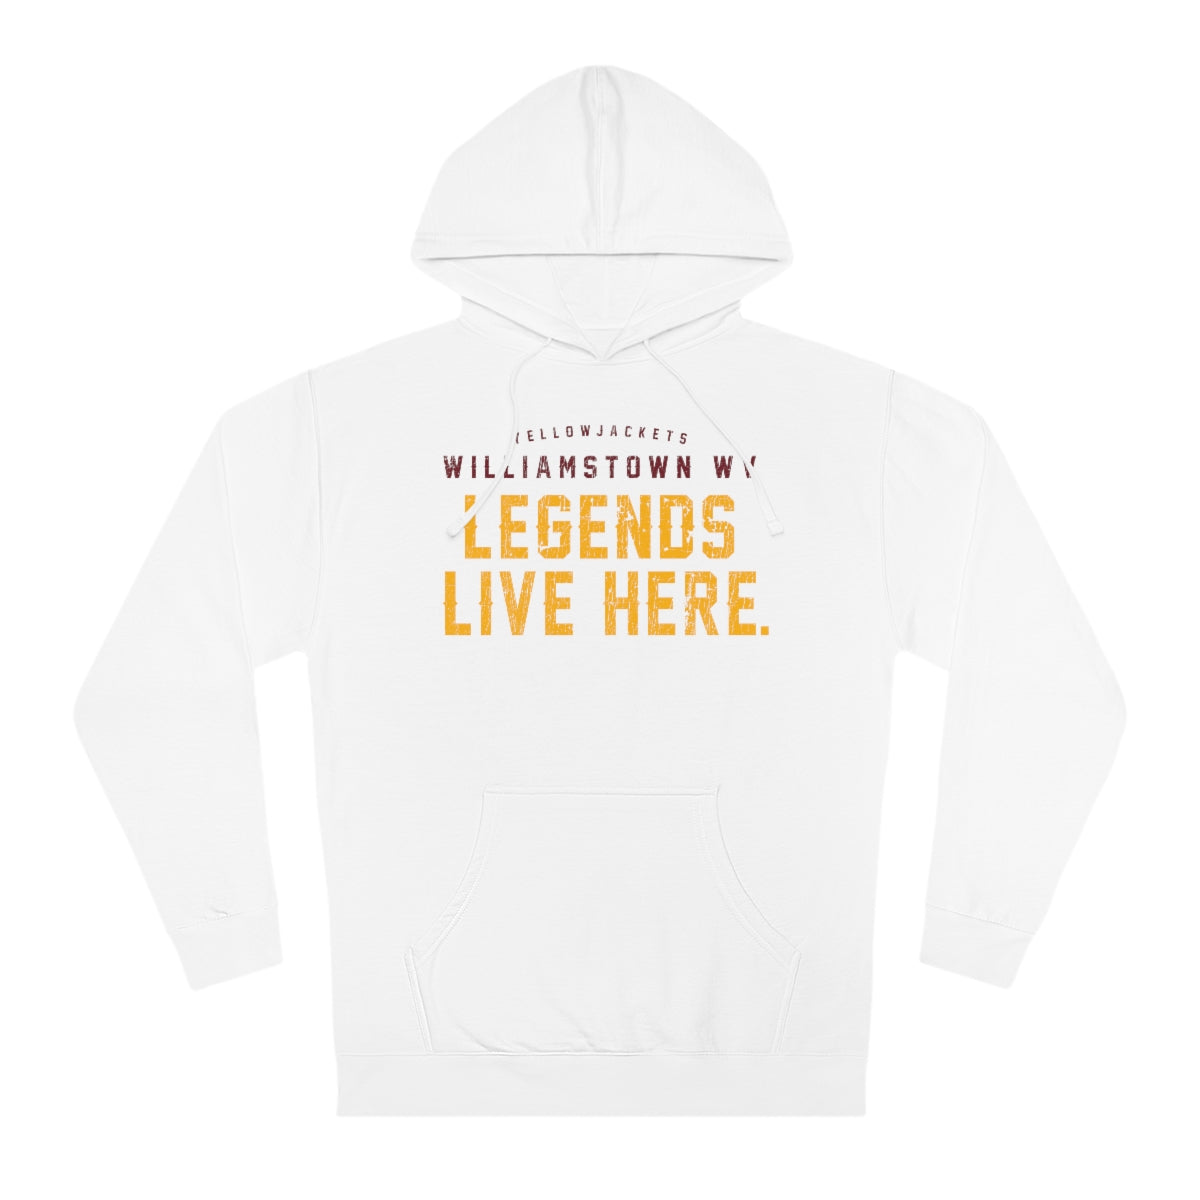 LEGENDS LIVE HERE. WILLIAMSTOWN WV-Unisex Hooded Sweatshirt